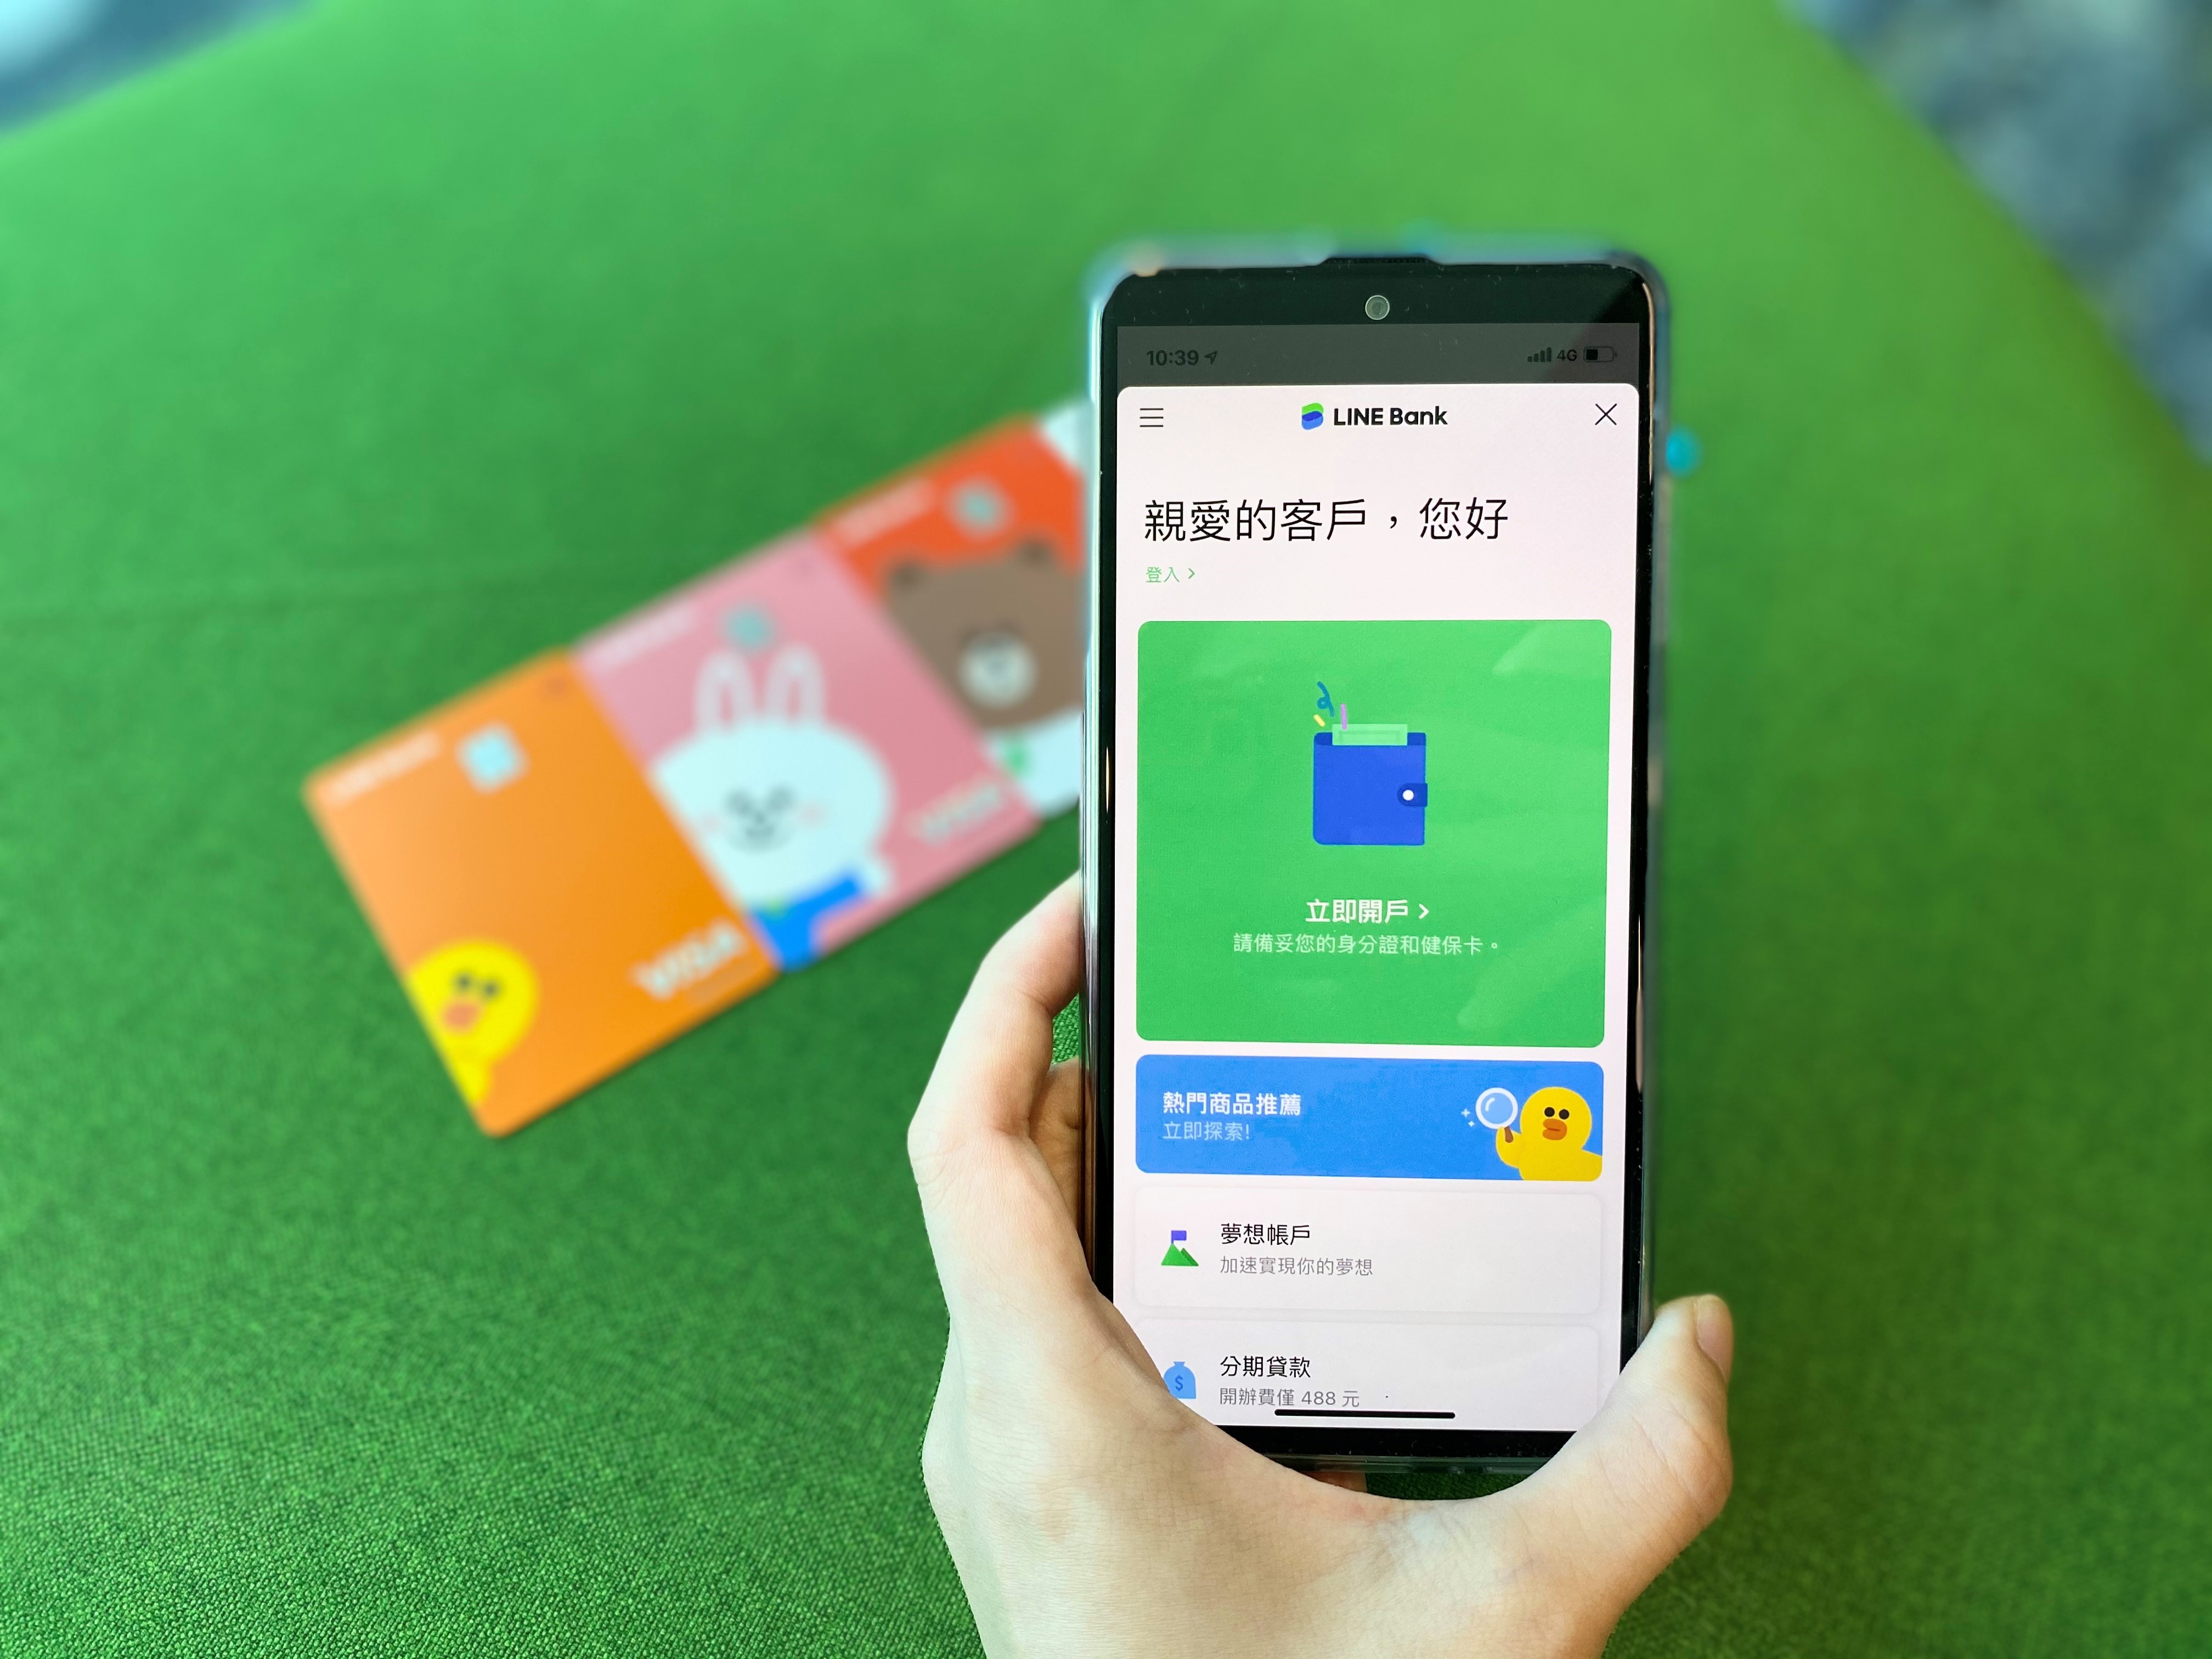 Line Bank Taiwan 最新消息 Line Bank 快點卡於momo購物網消費週末不限金額首筆回饋11